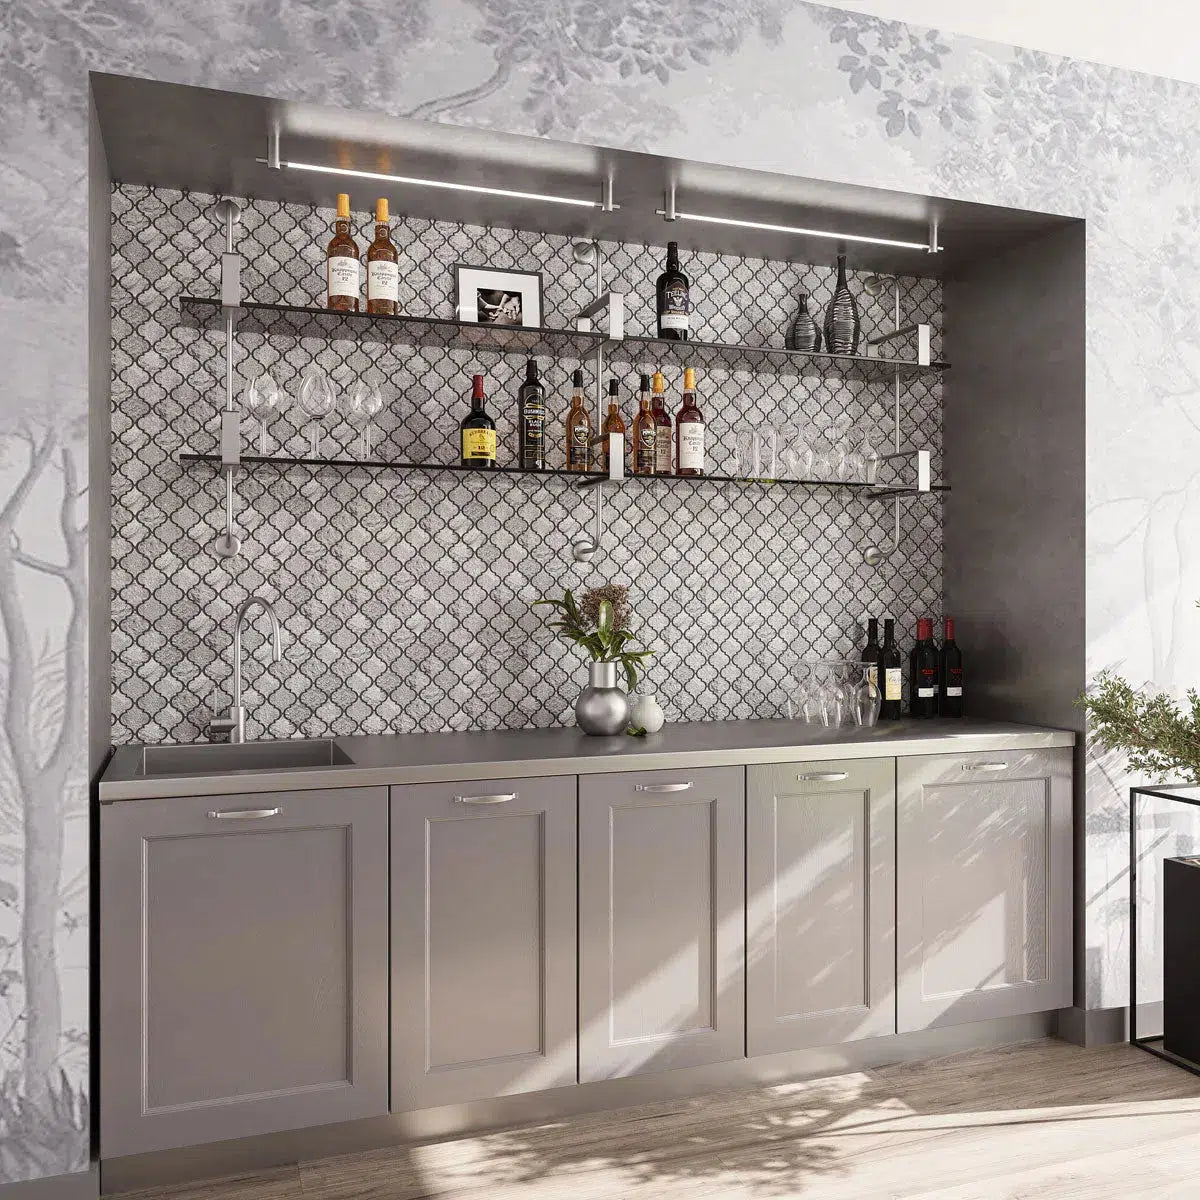 Built-in Wet Bar with Silver Arabesque Mosaic Backsplash Tile